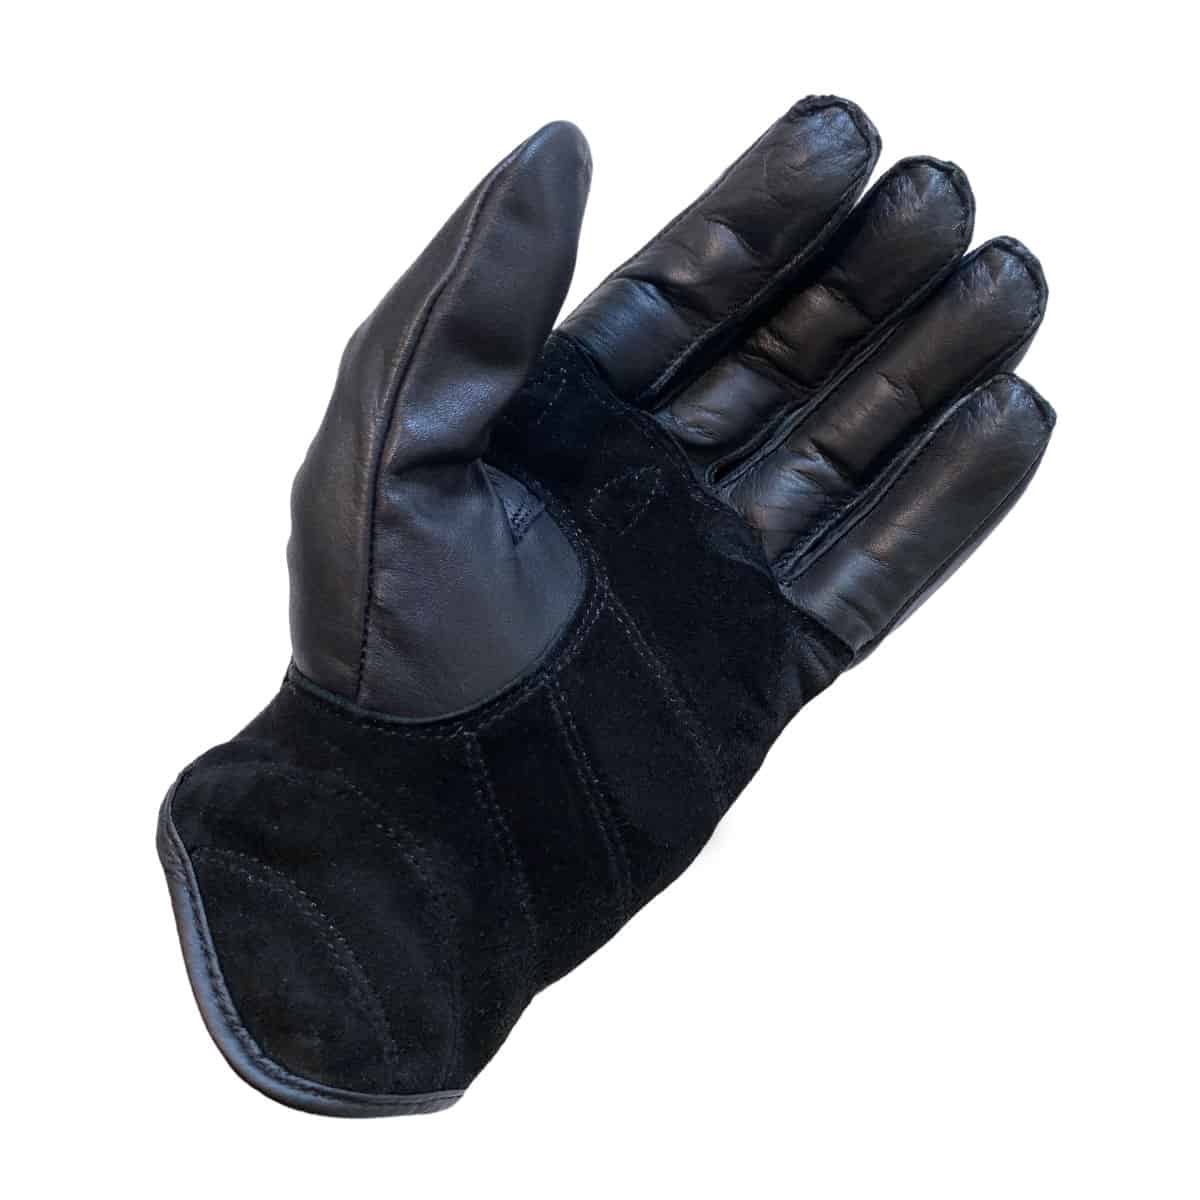 Spada Wyatt Gloves: Short-cuffed summer gloves palm